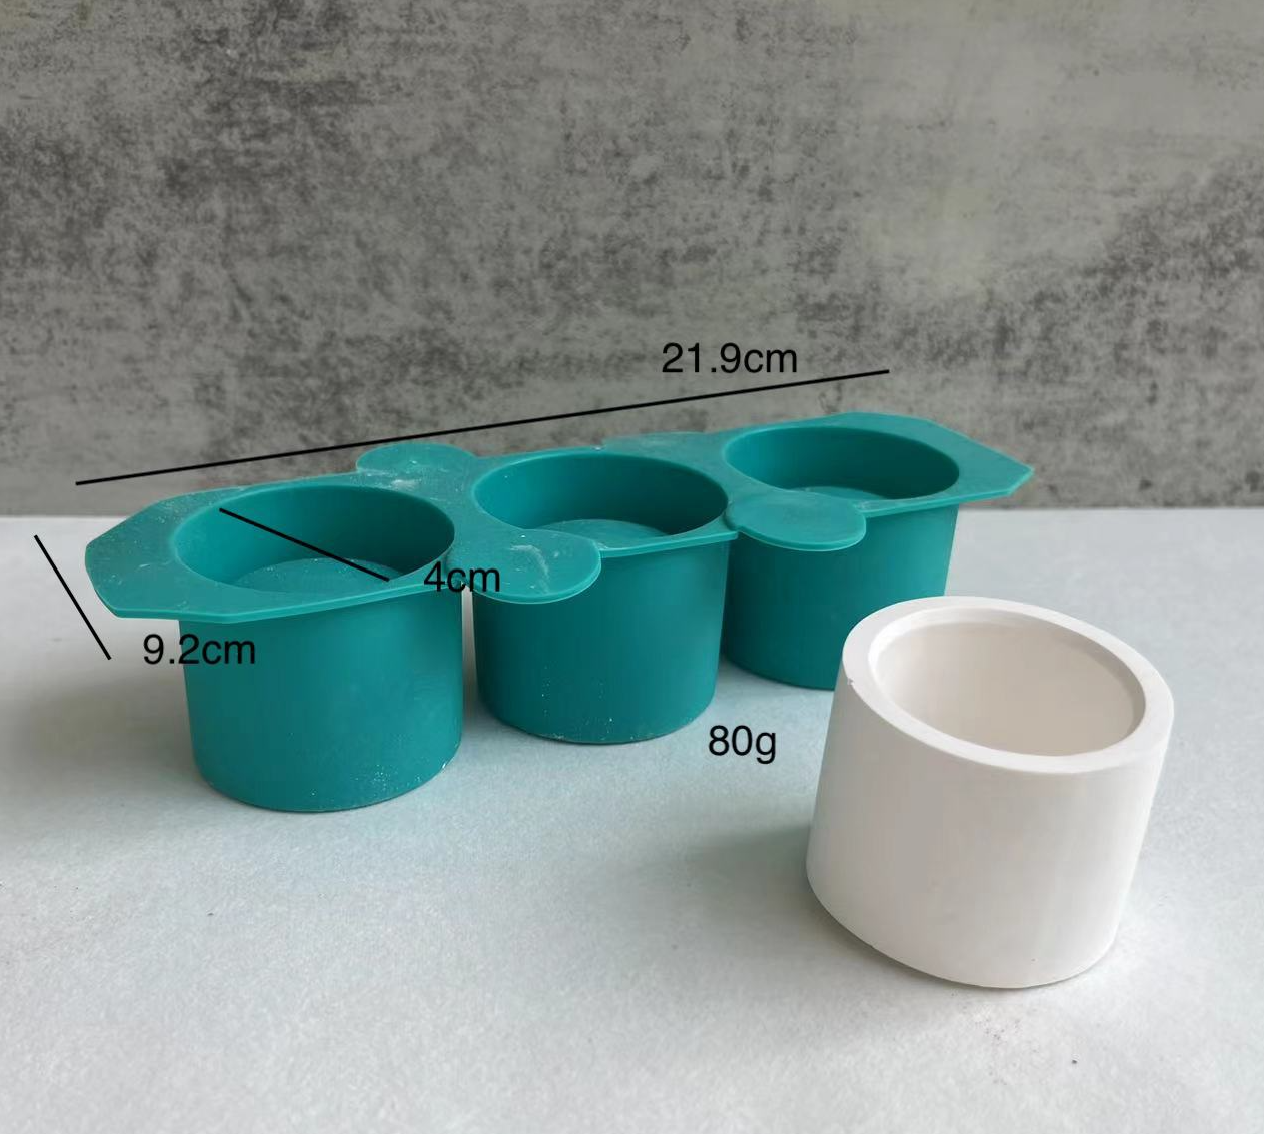 Round Vase Mold 60g - 3pcs